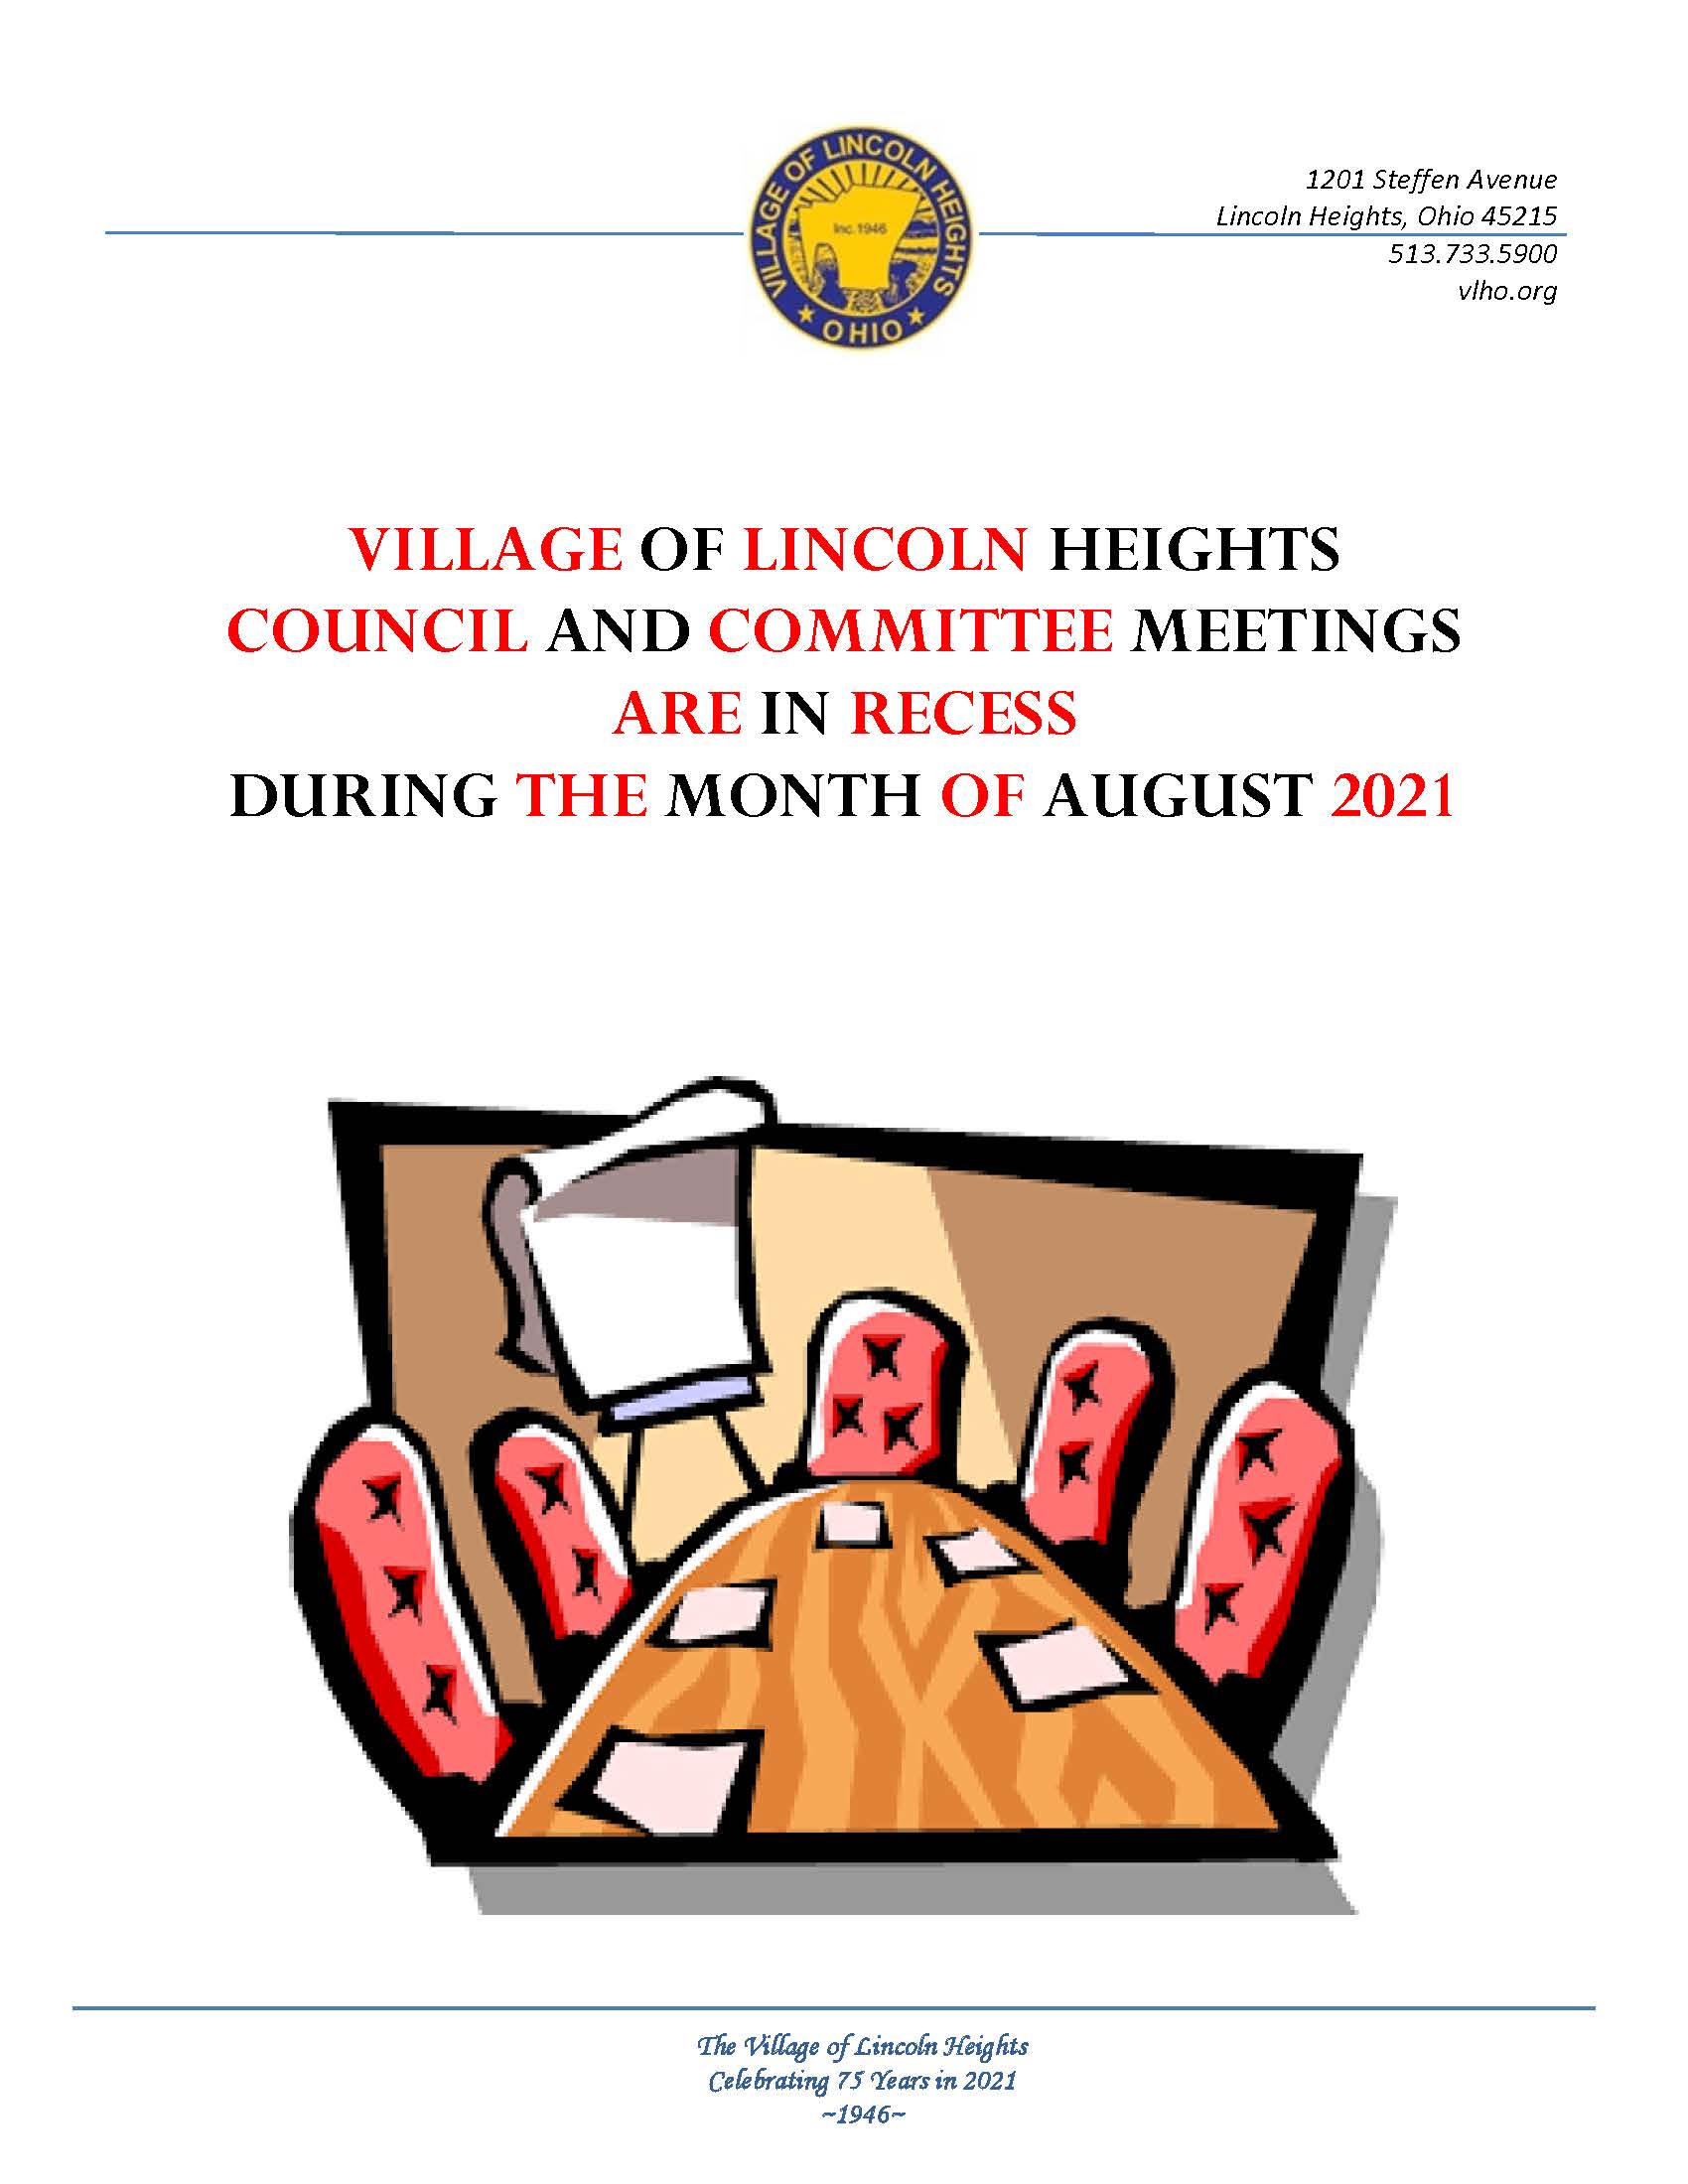 RECESS flyer for Council August 2021 recess